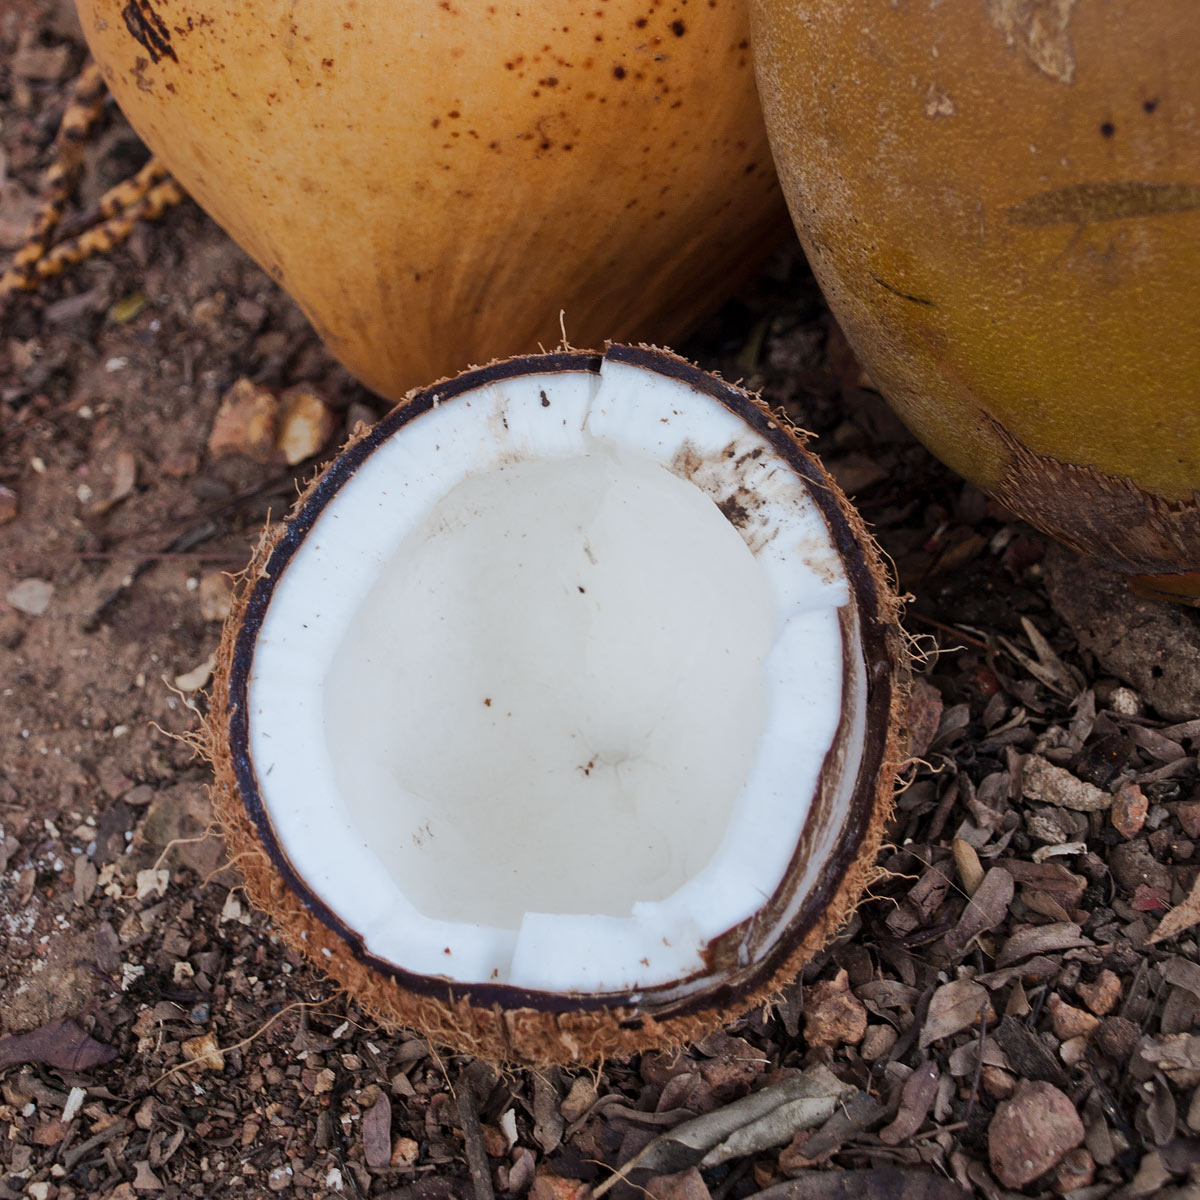 Coconut cracked open